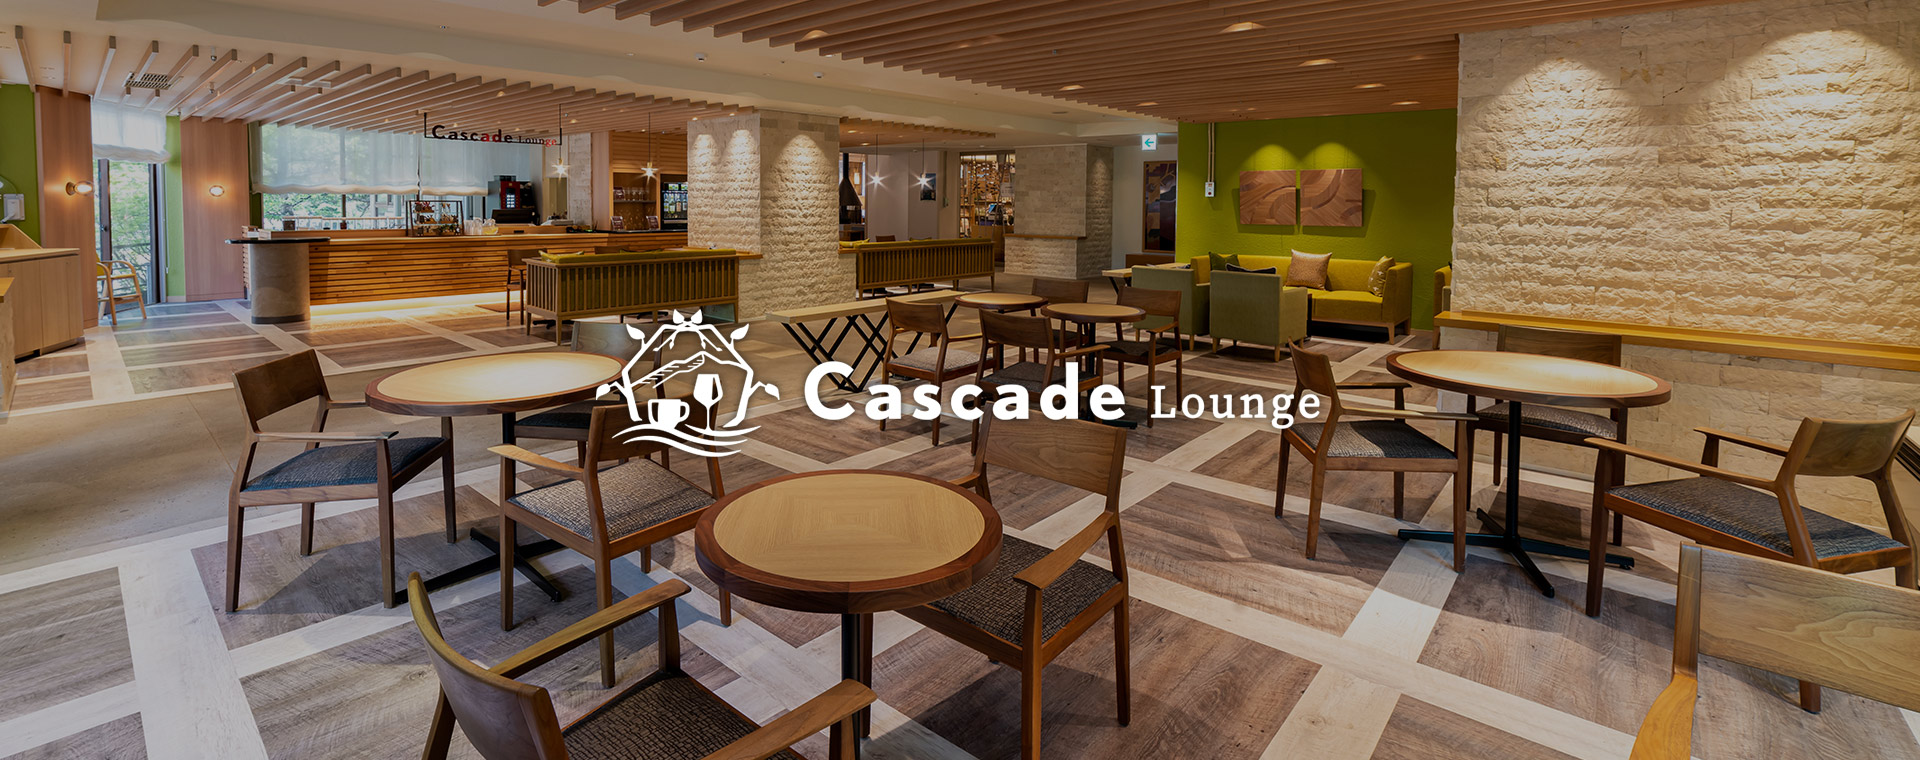 Cascade Lounge